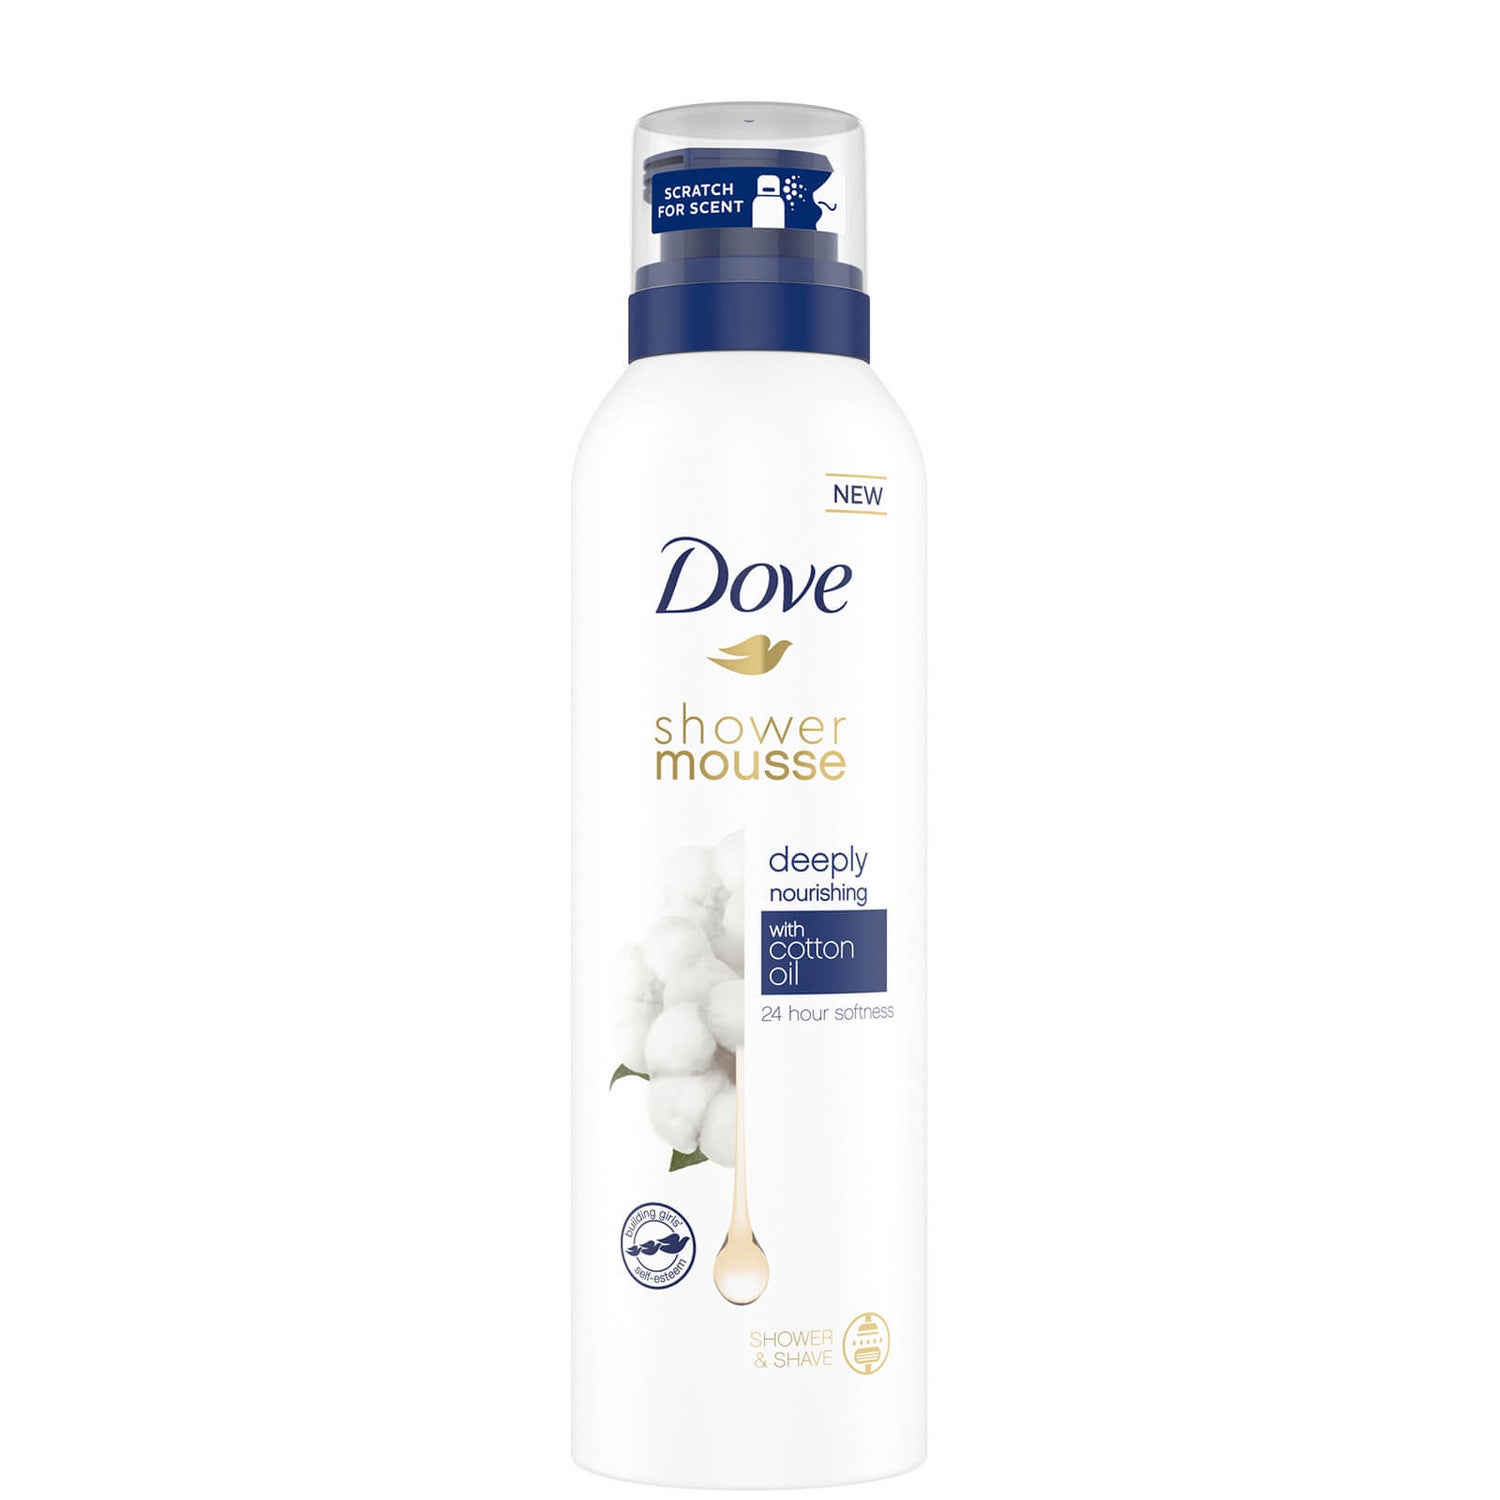 Dove Deeply Nourishing Shower Mousse 200ml